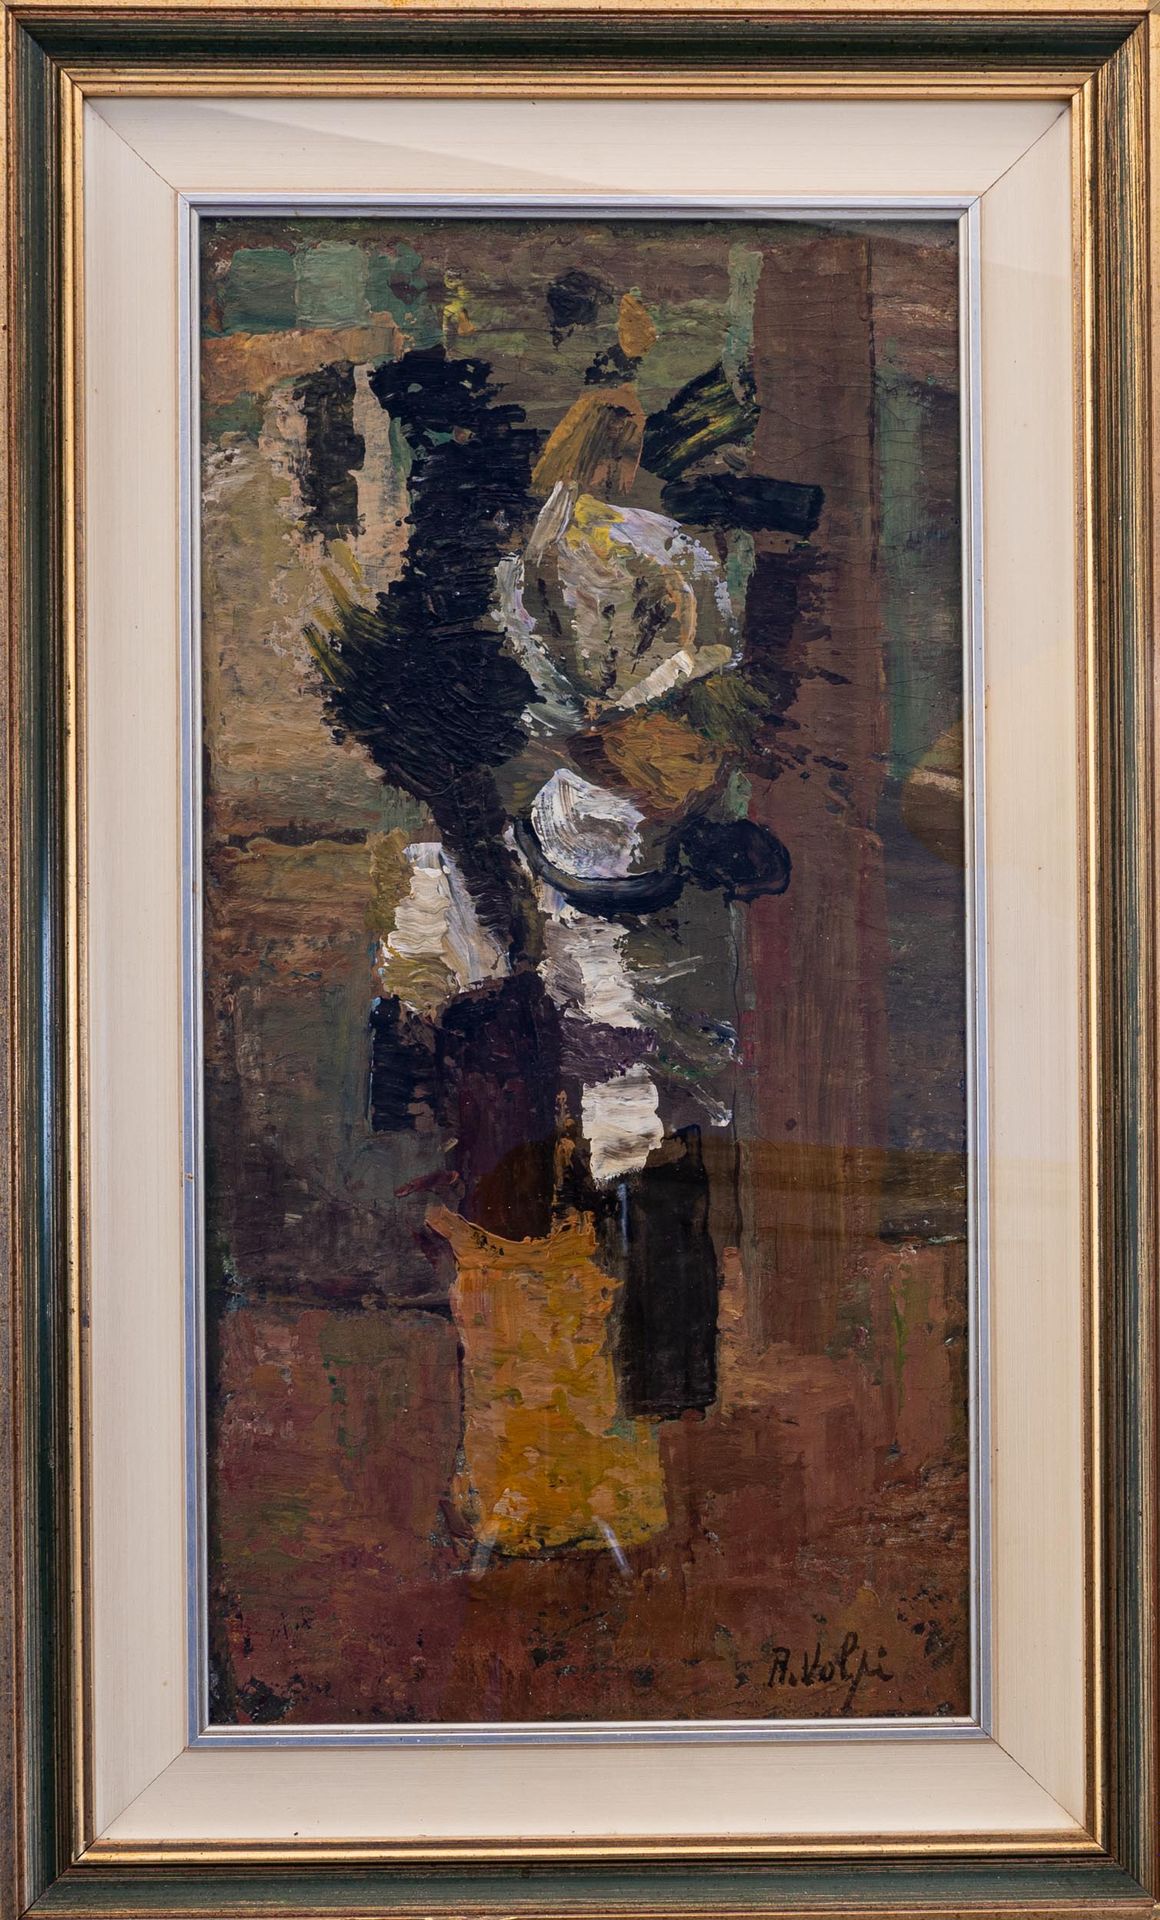 ALESSANDRO VOLPI (Pisa 1909 - Pisa 1978) 静物

板上油彩

63x33厘米